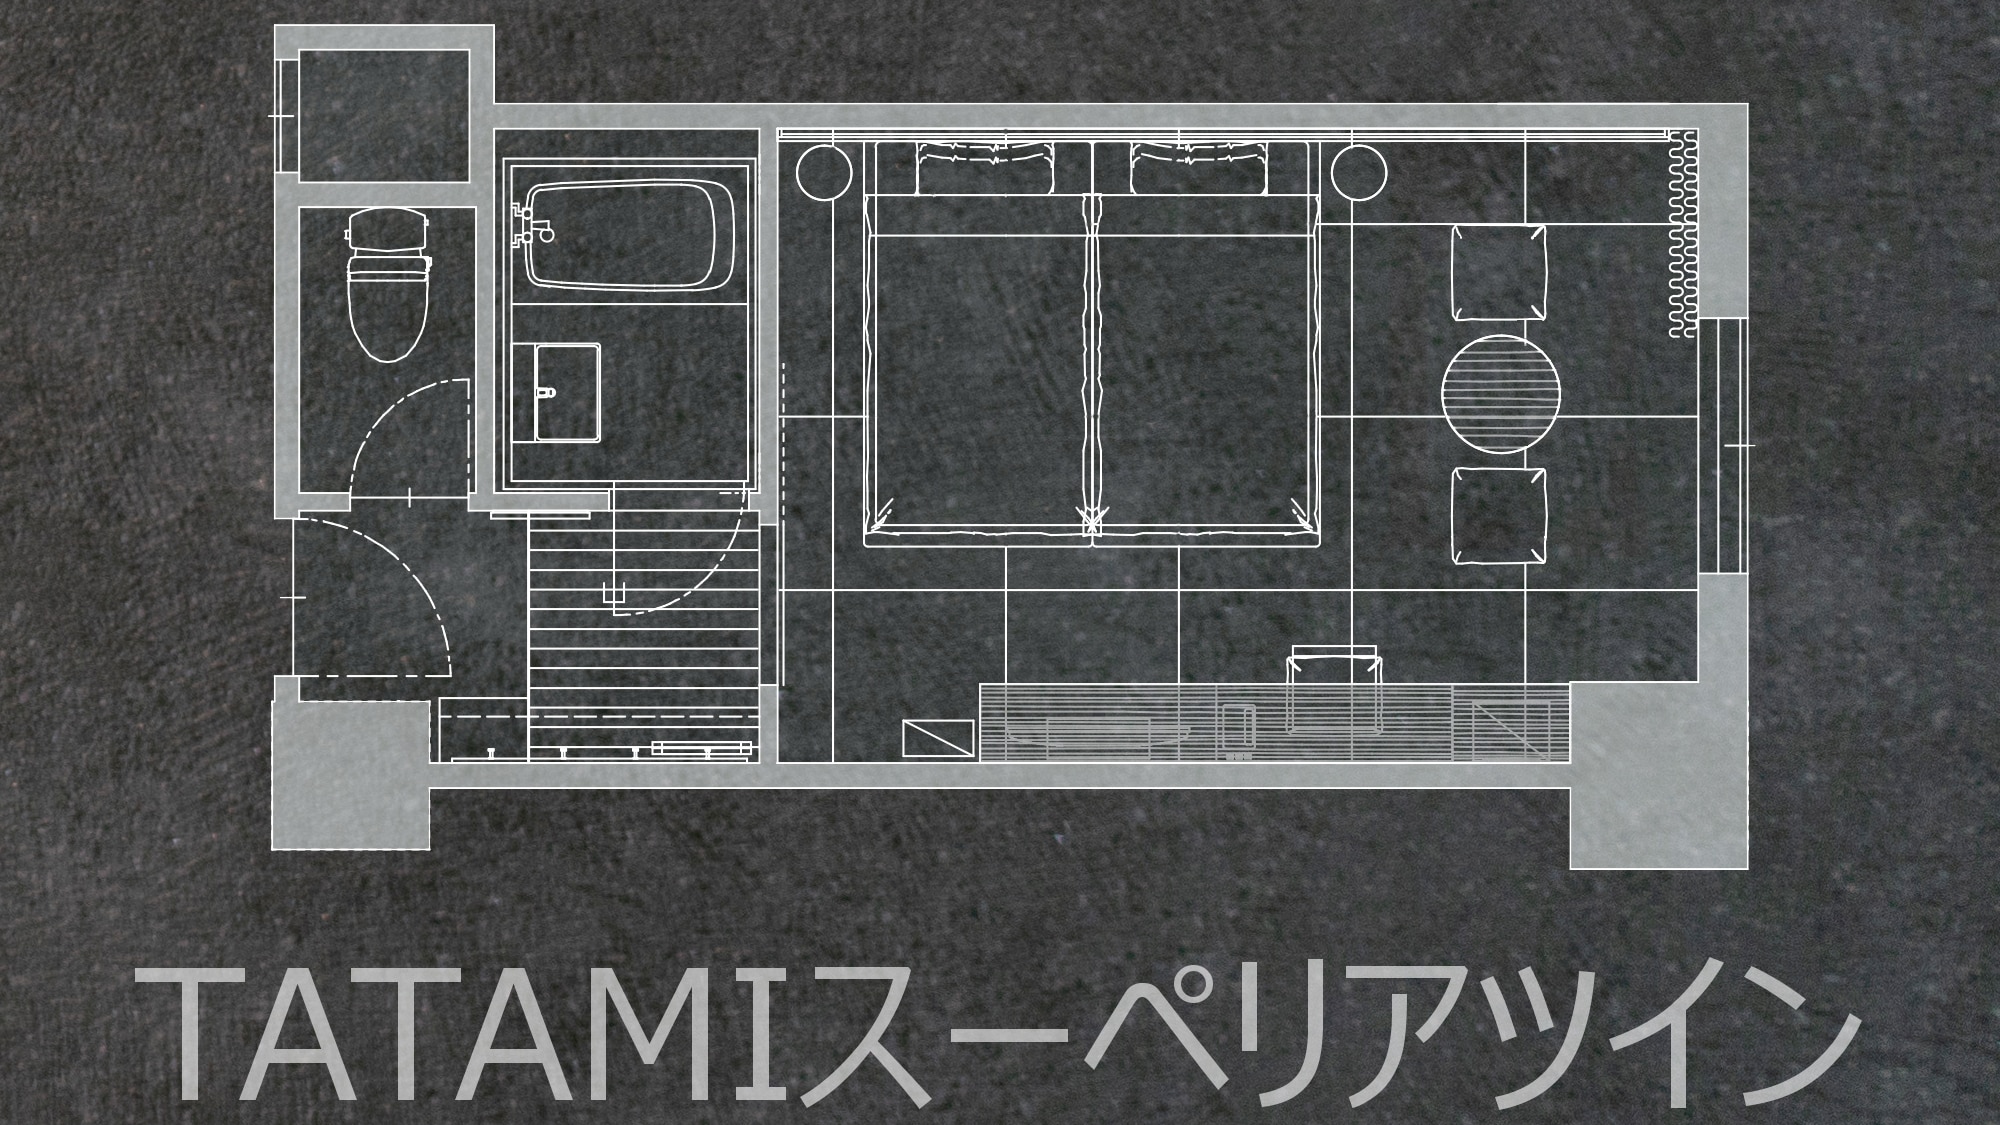 TATAMI Superior Twin (Floor plan)